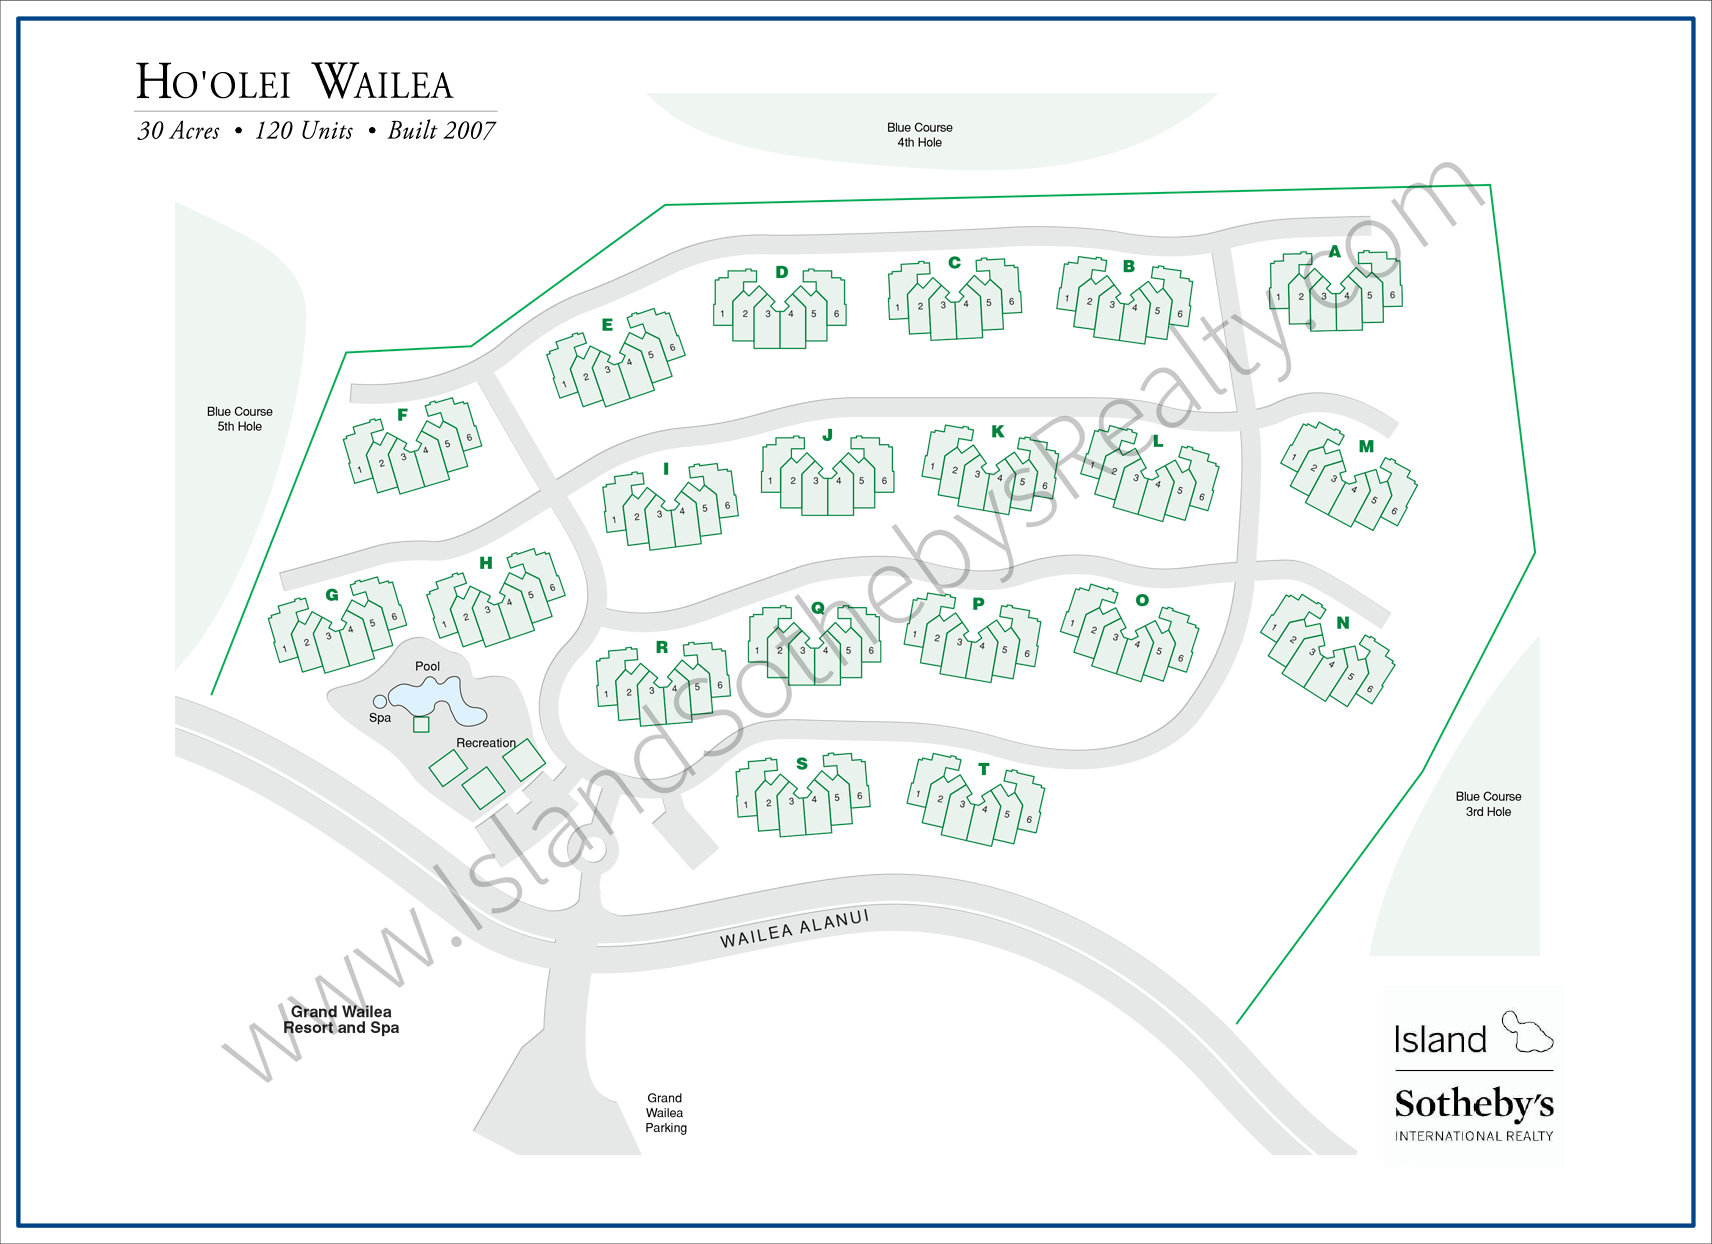 Map of Hoolei Wailea Maui